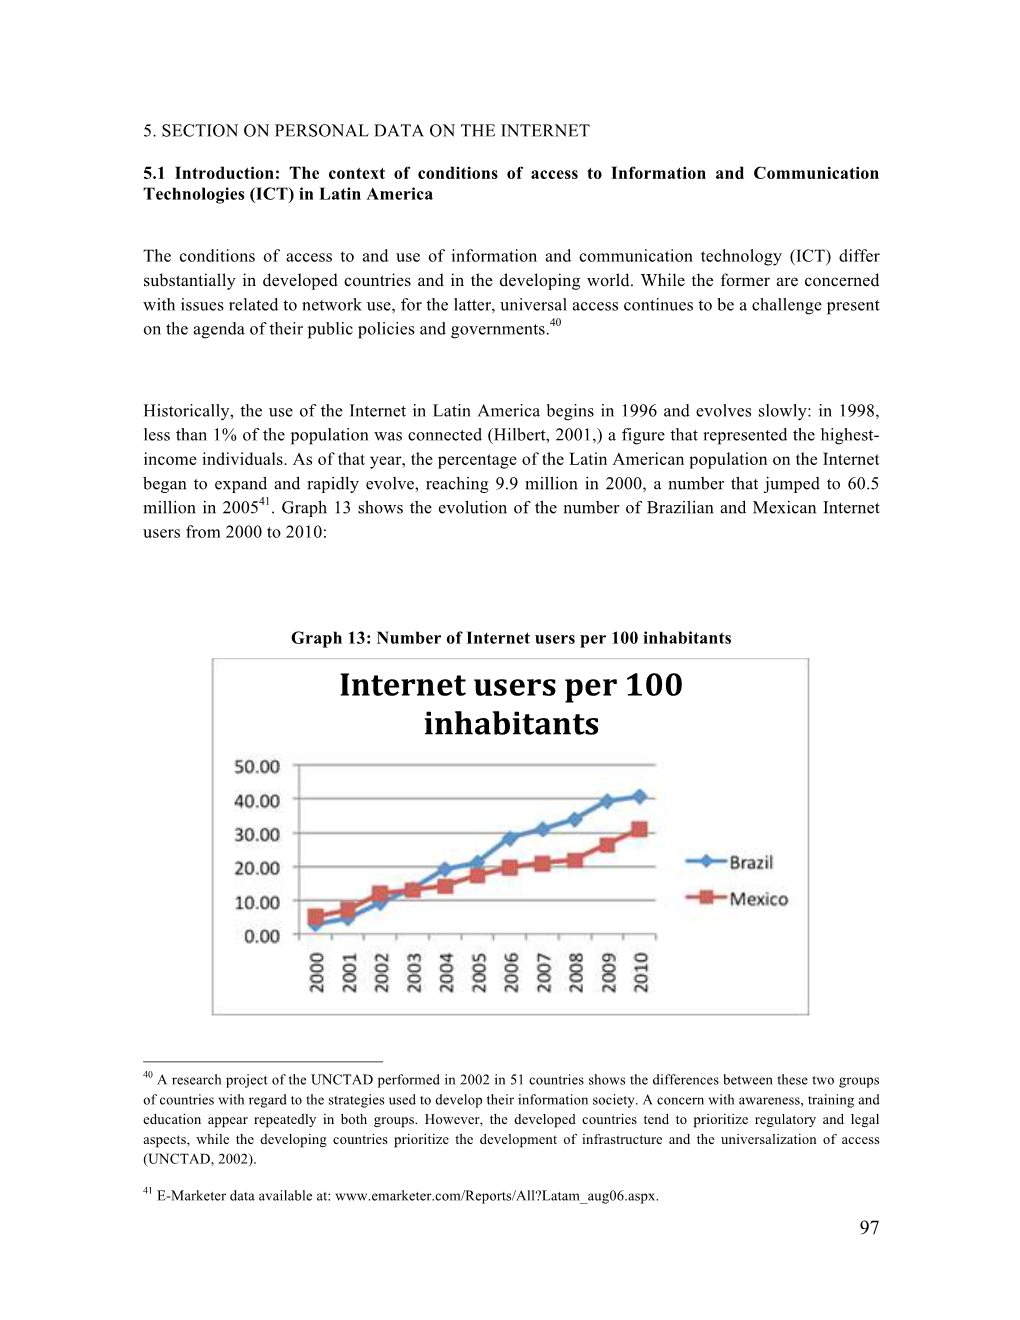 Internet Users Per 100 Inhabitants